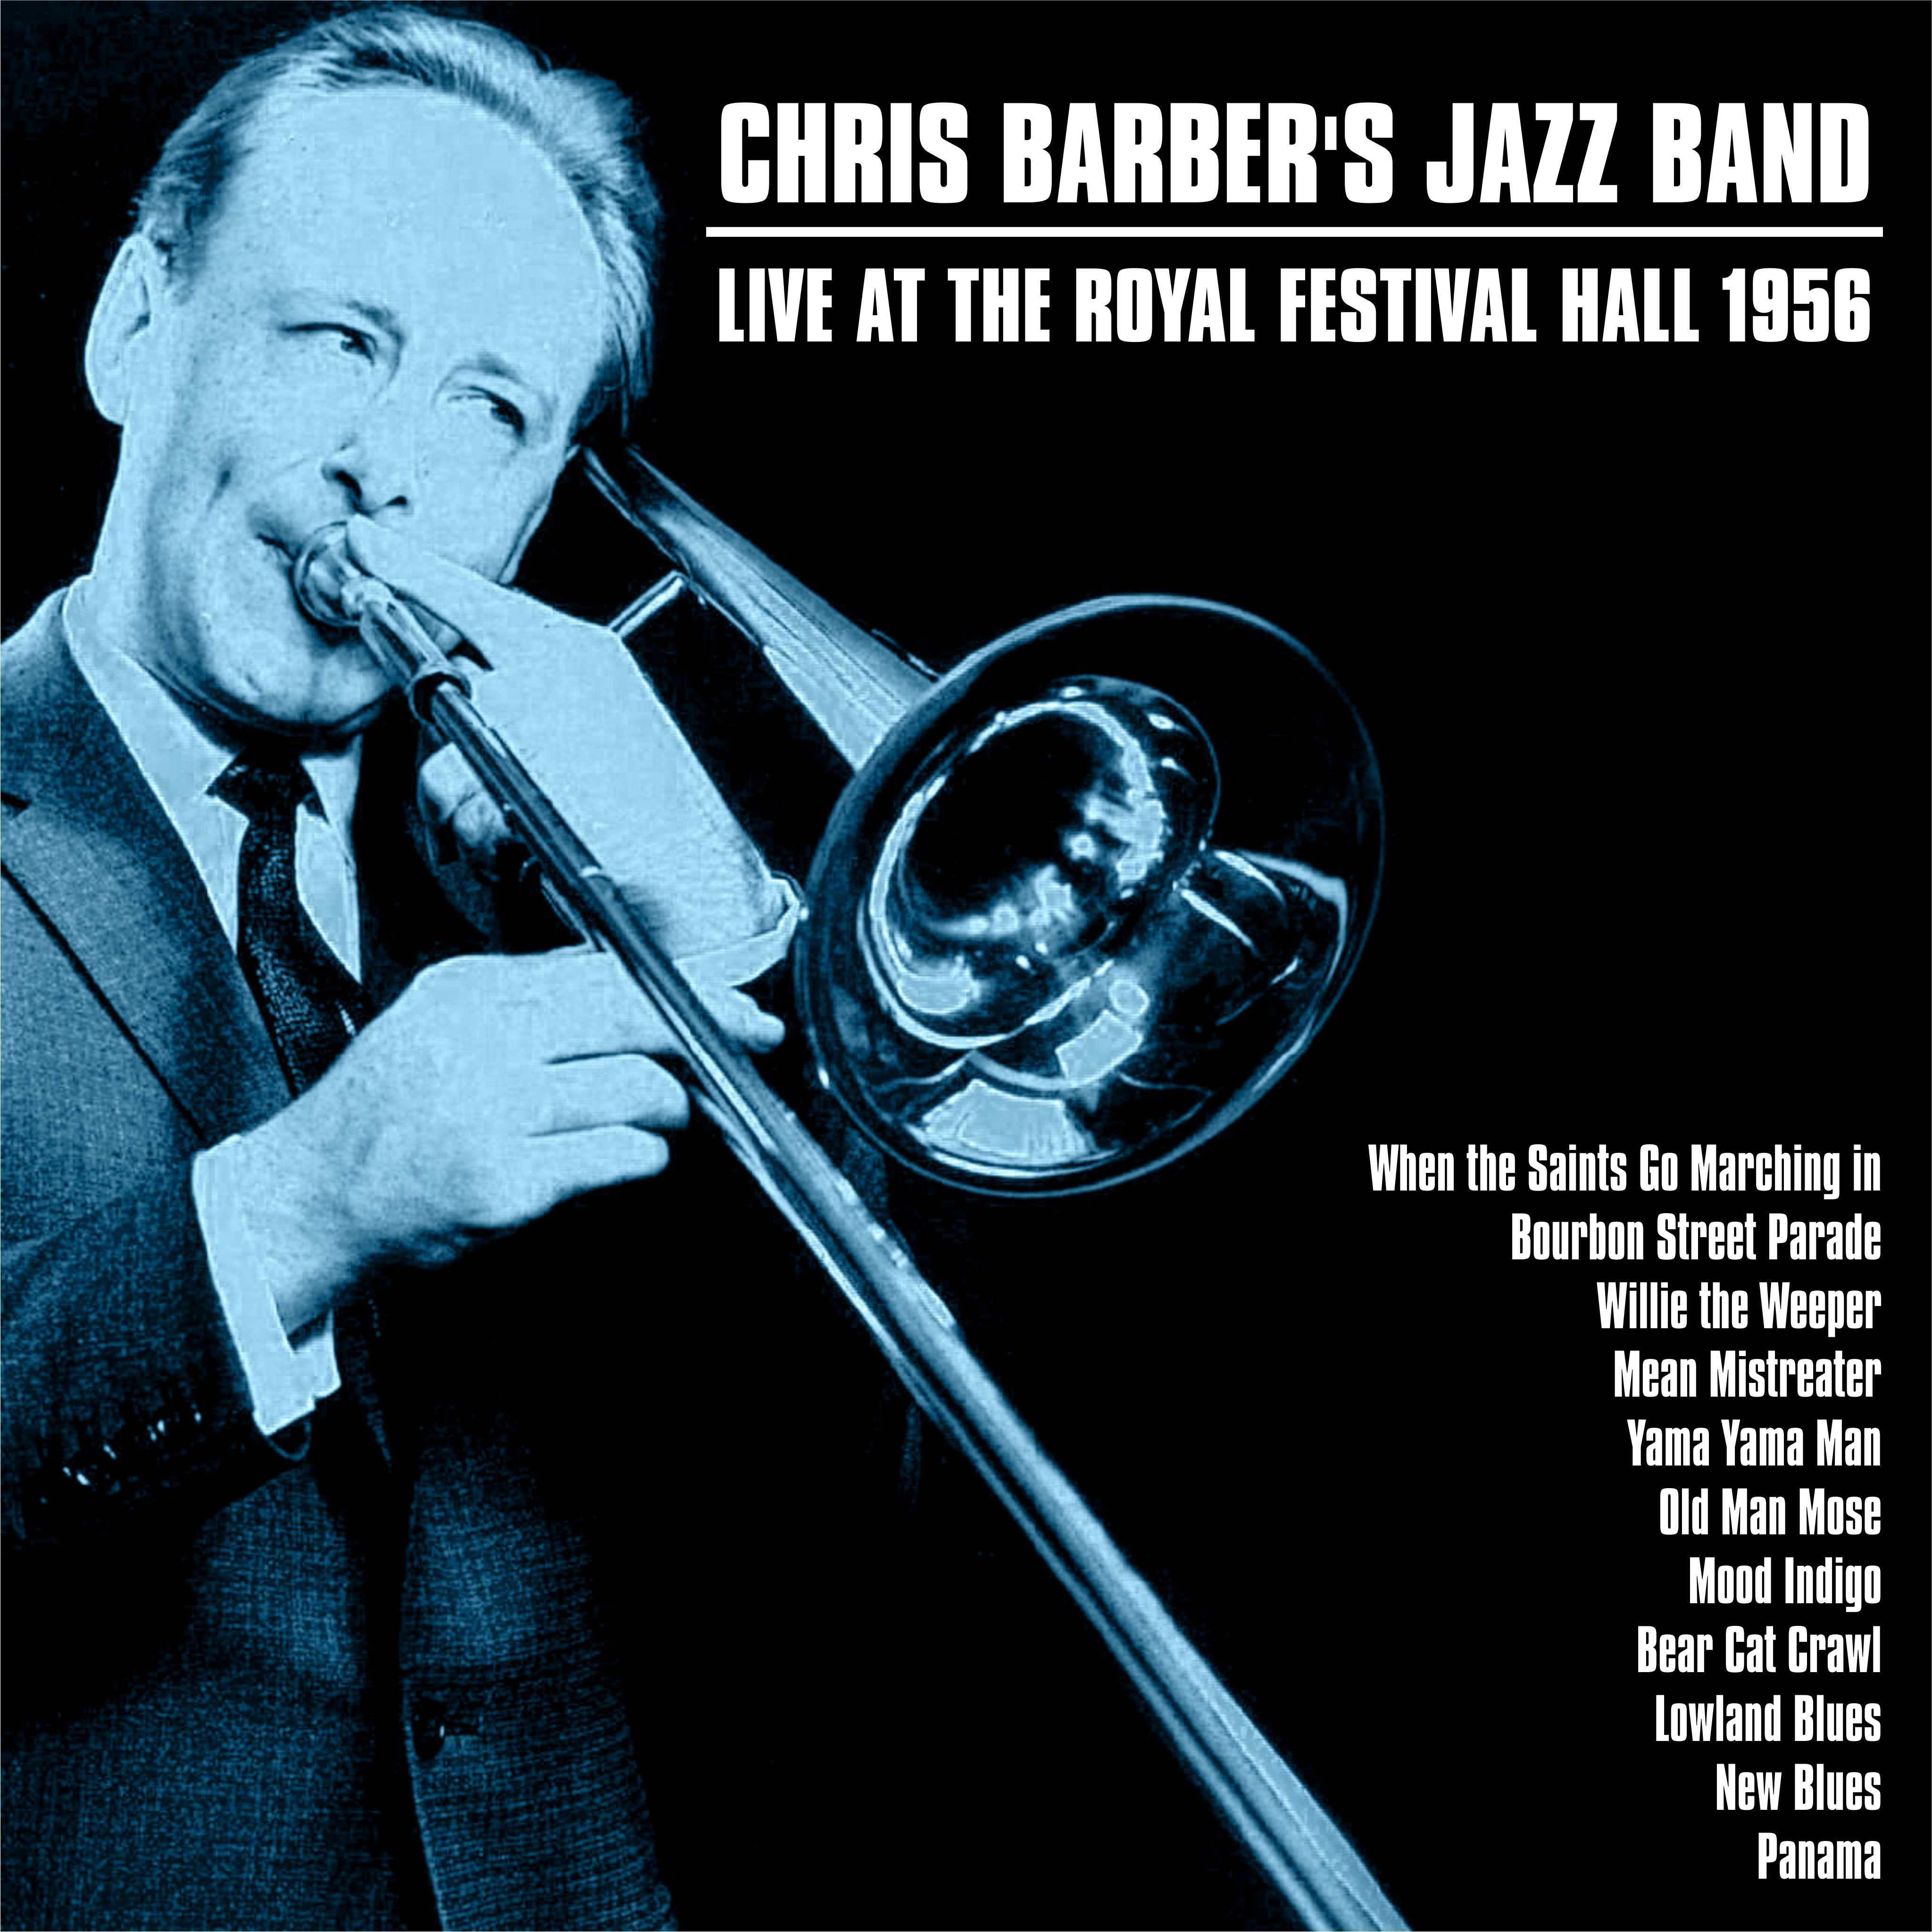 Chris Barber's Jazz Band Live At The Royal Festival Hall 1956